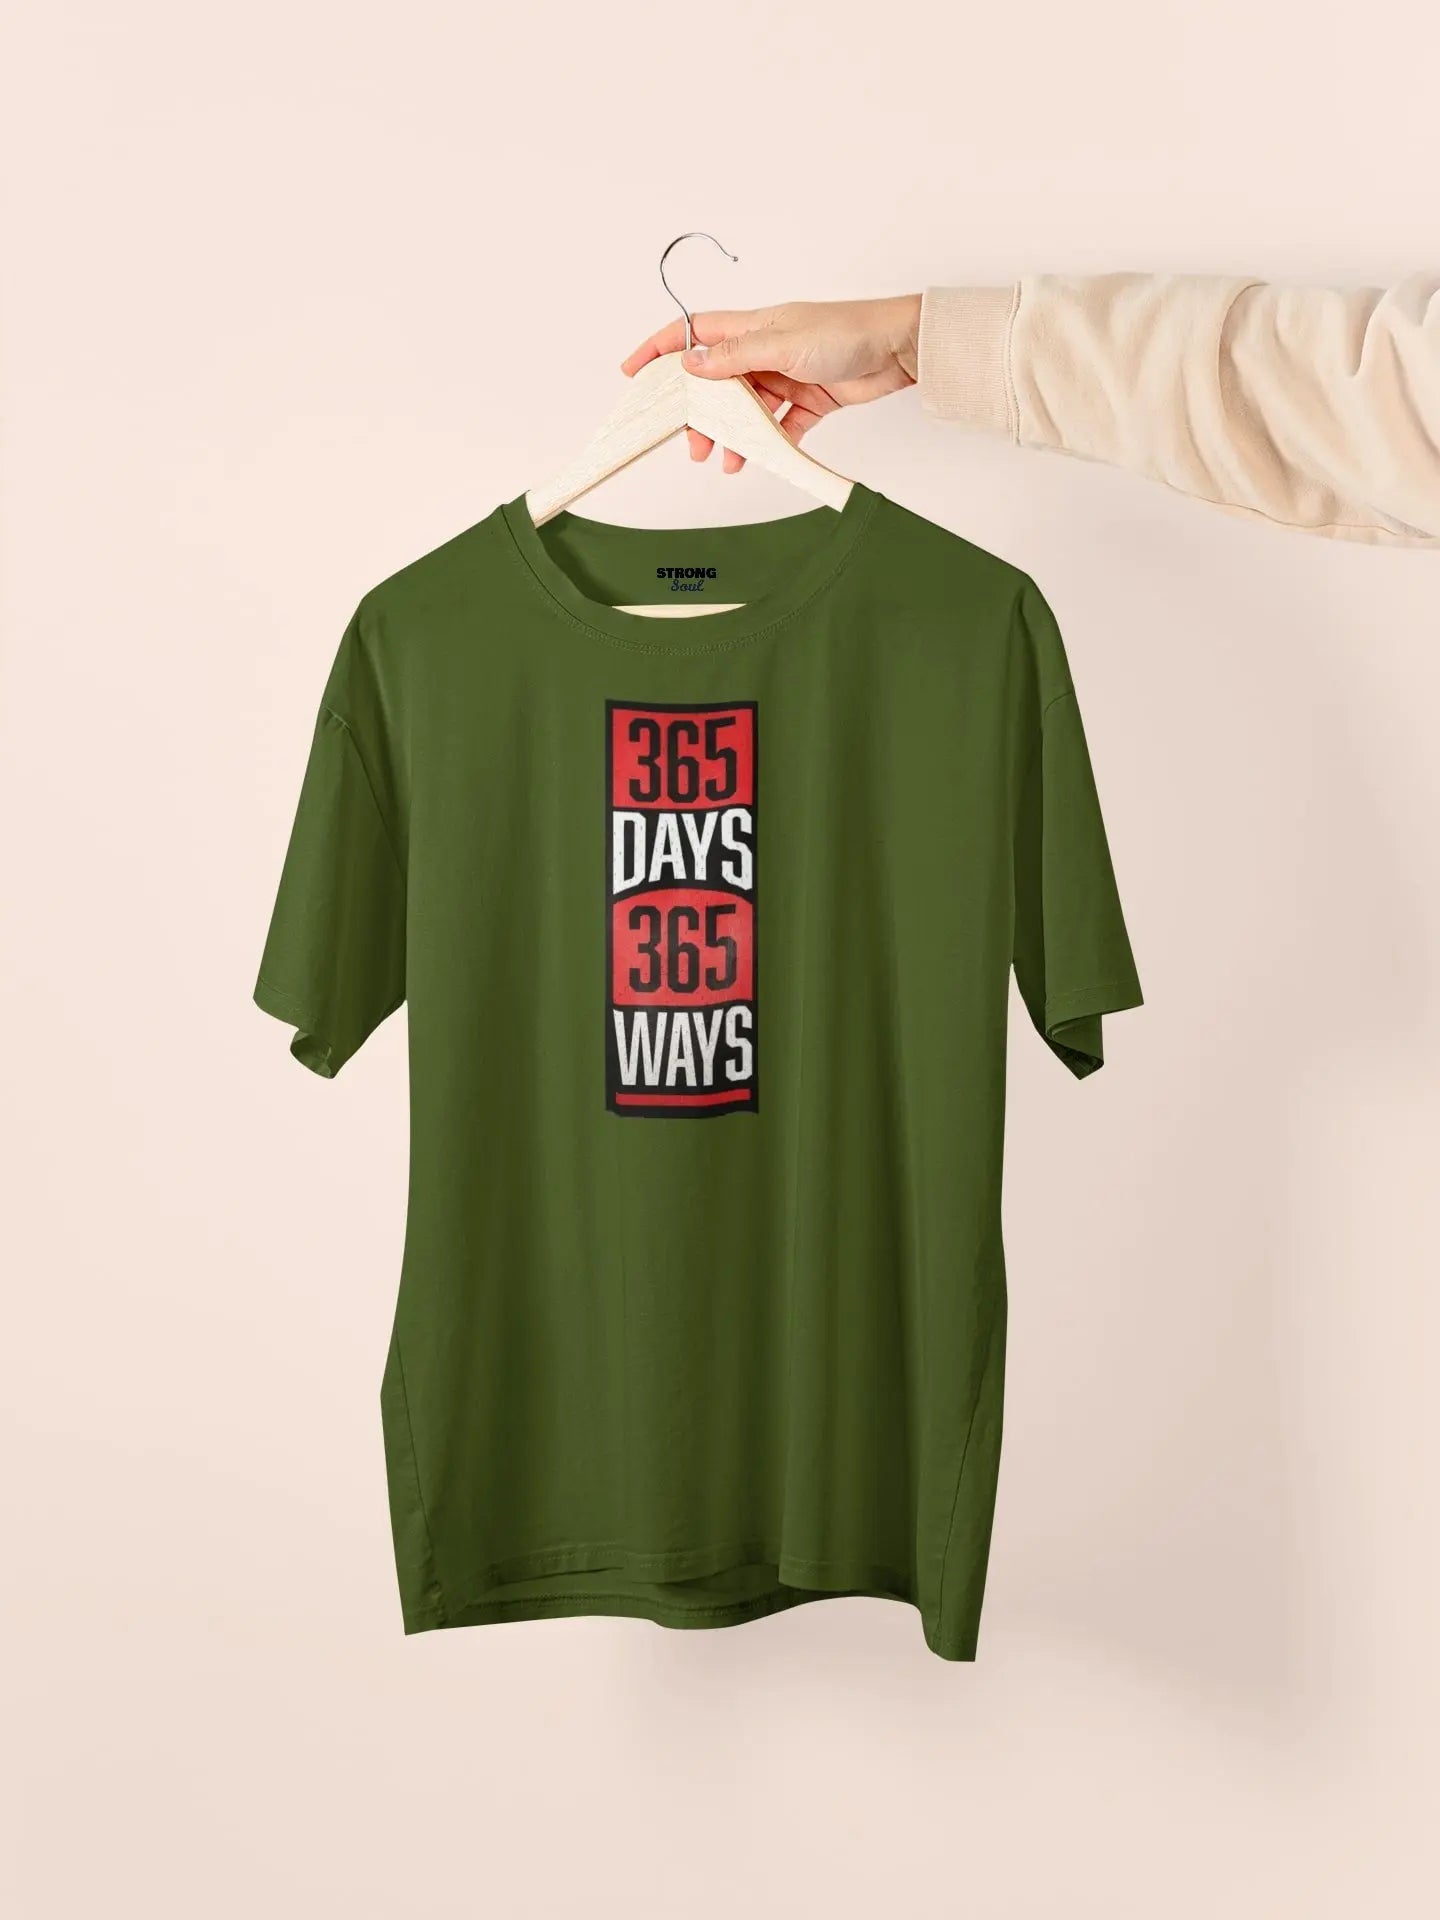 Gym T Shirt - 365 Days 365 Ways - Sports T Shirt - Strong Soul